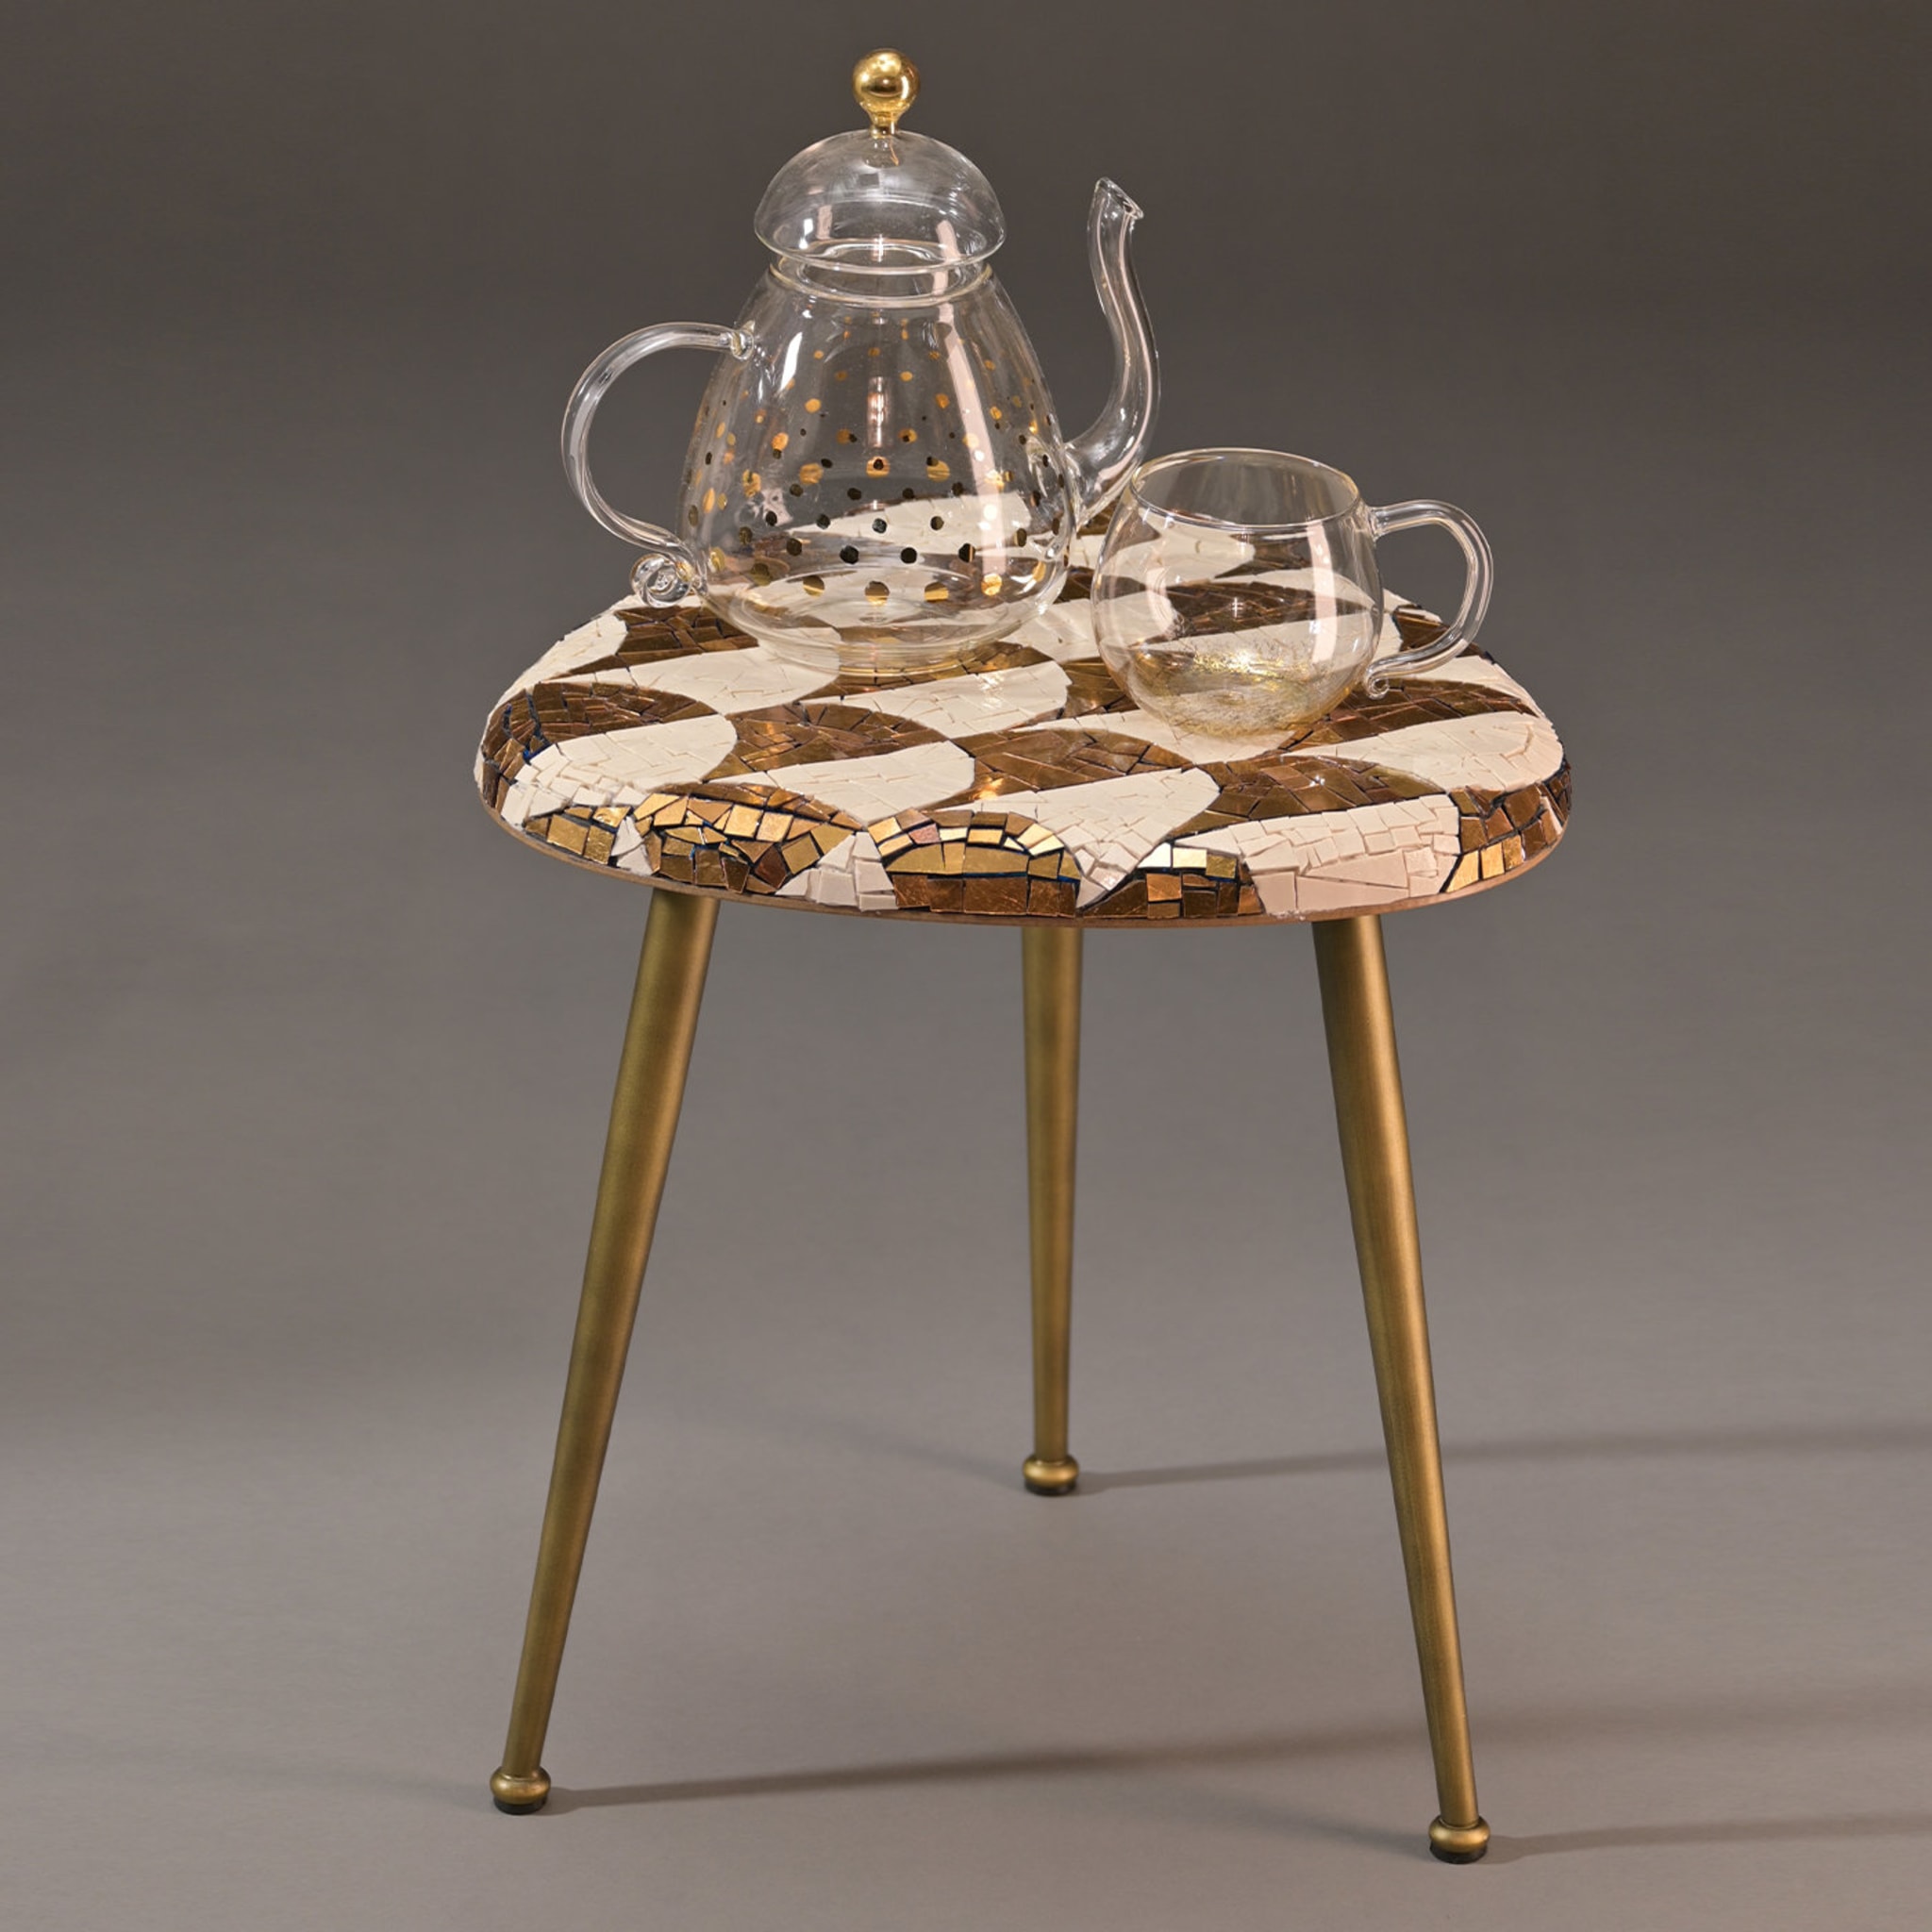 Casarialto Atelier Palmira coffee table by Michela Nardin - Alternative view 2